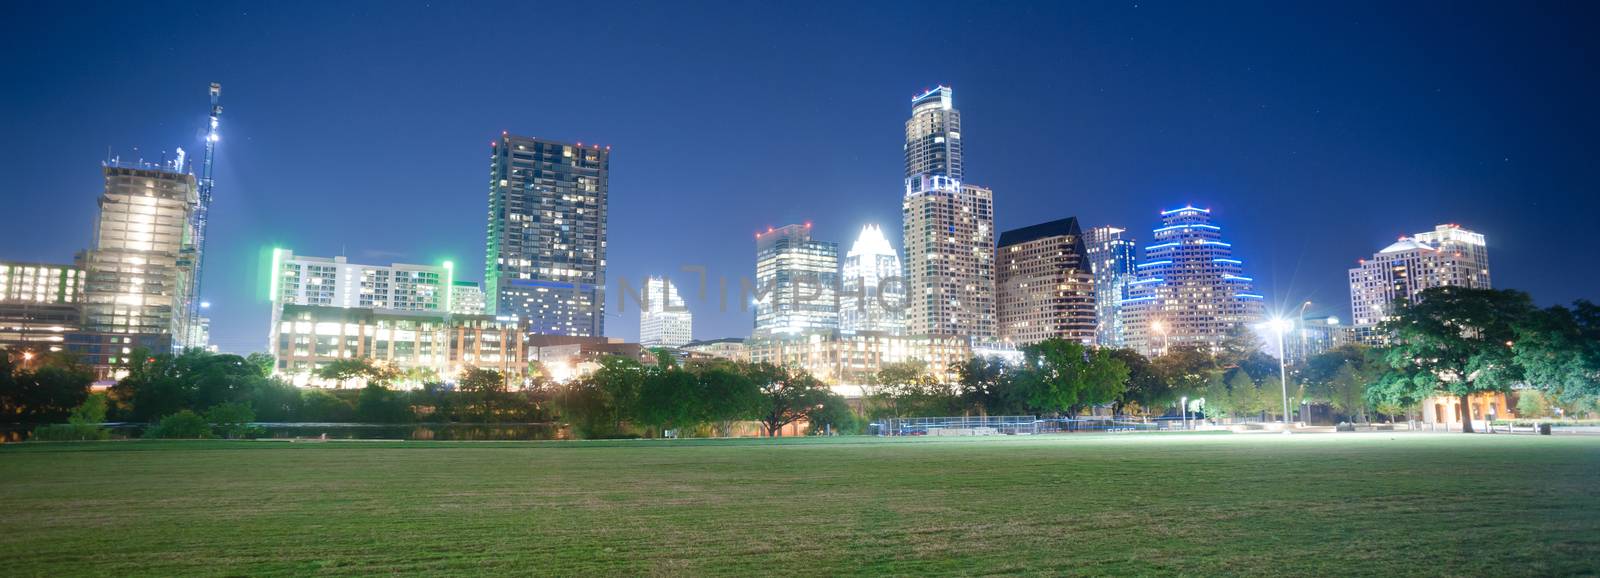 Downtown Austin Texas Skyline View Zilker Metropolitan Park by ChrisBoswell